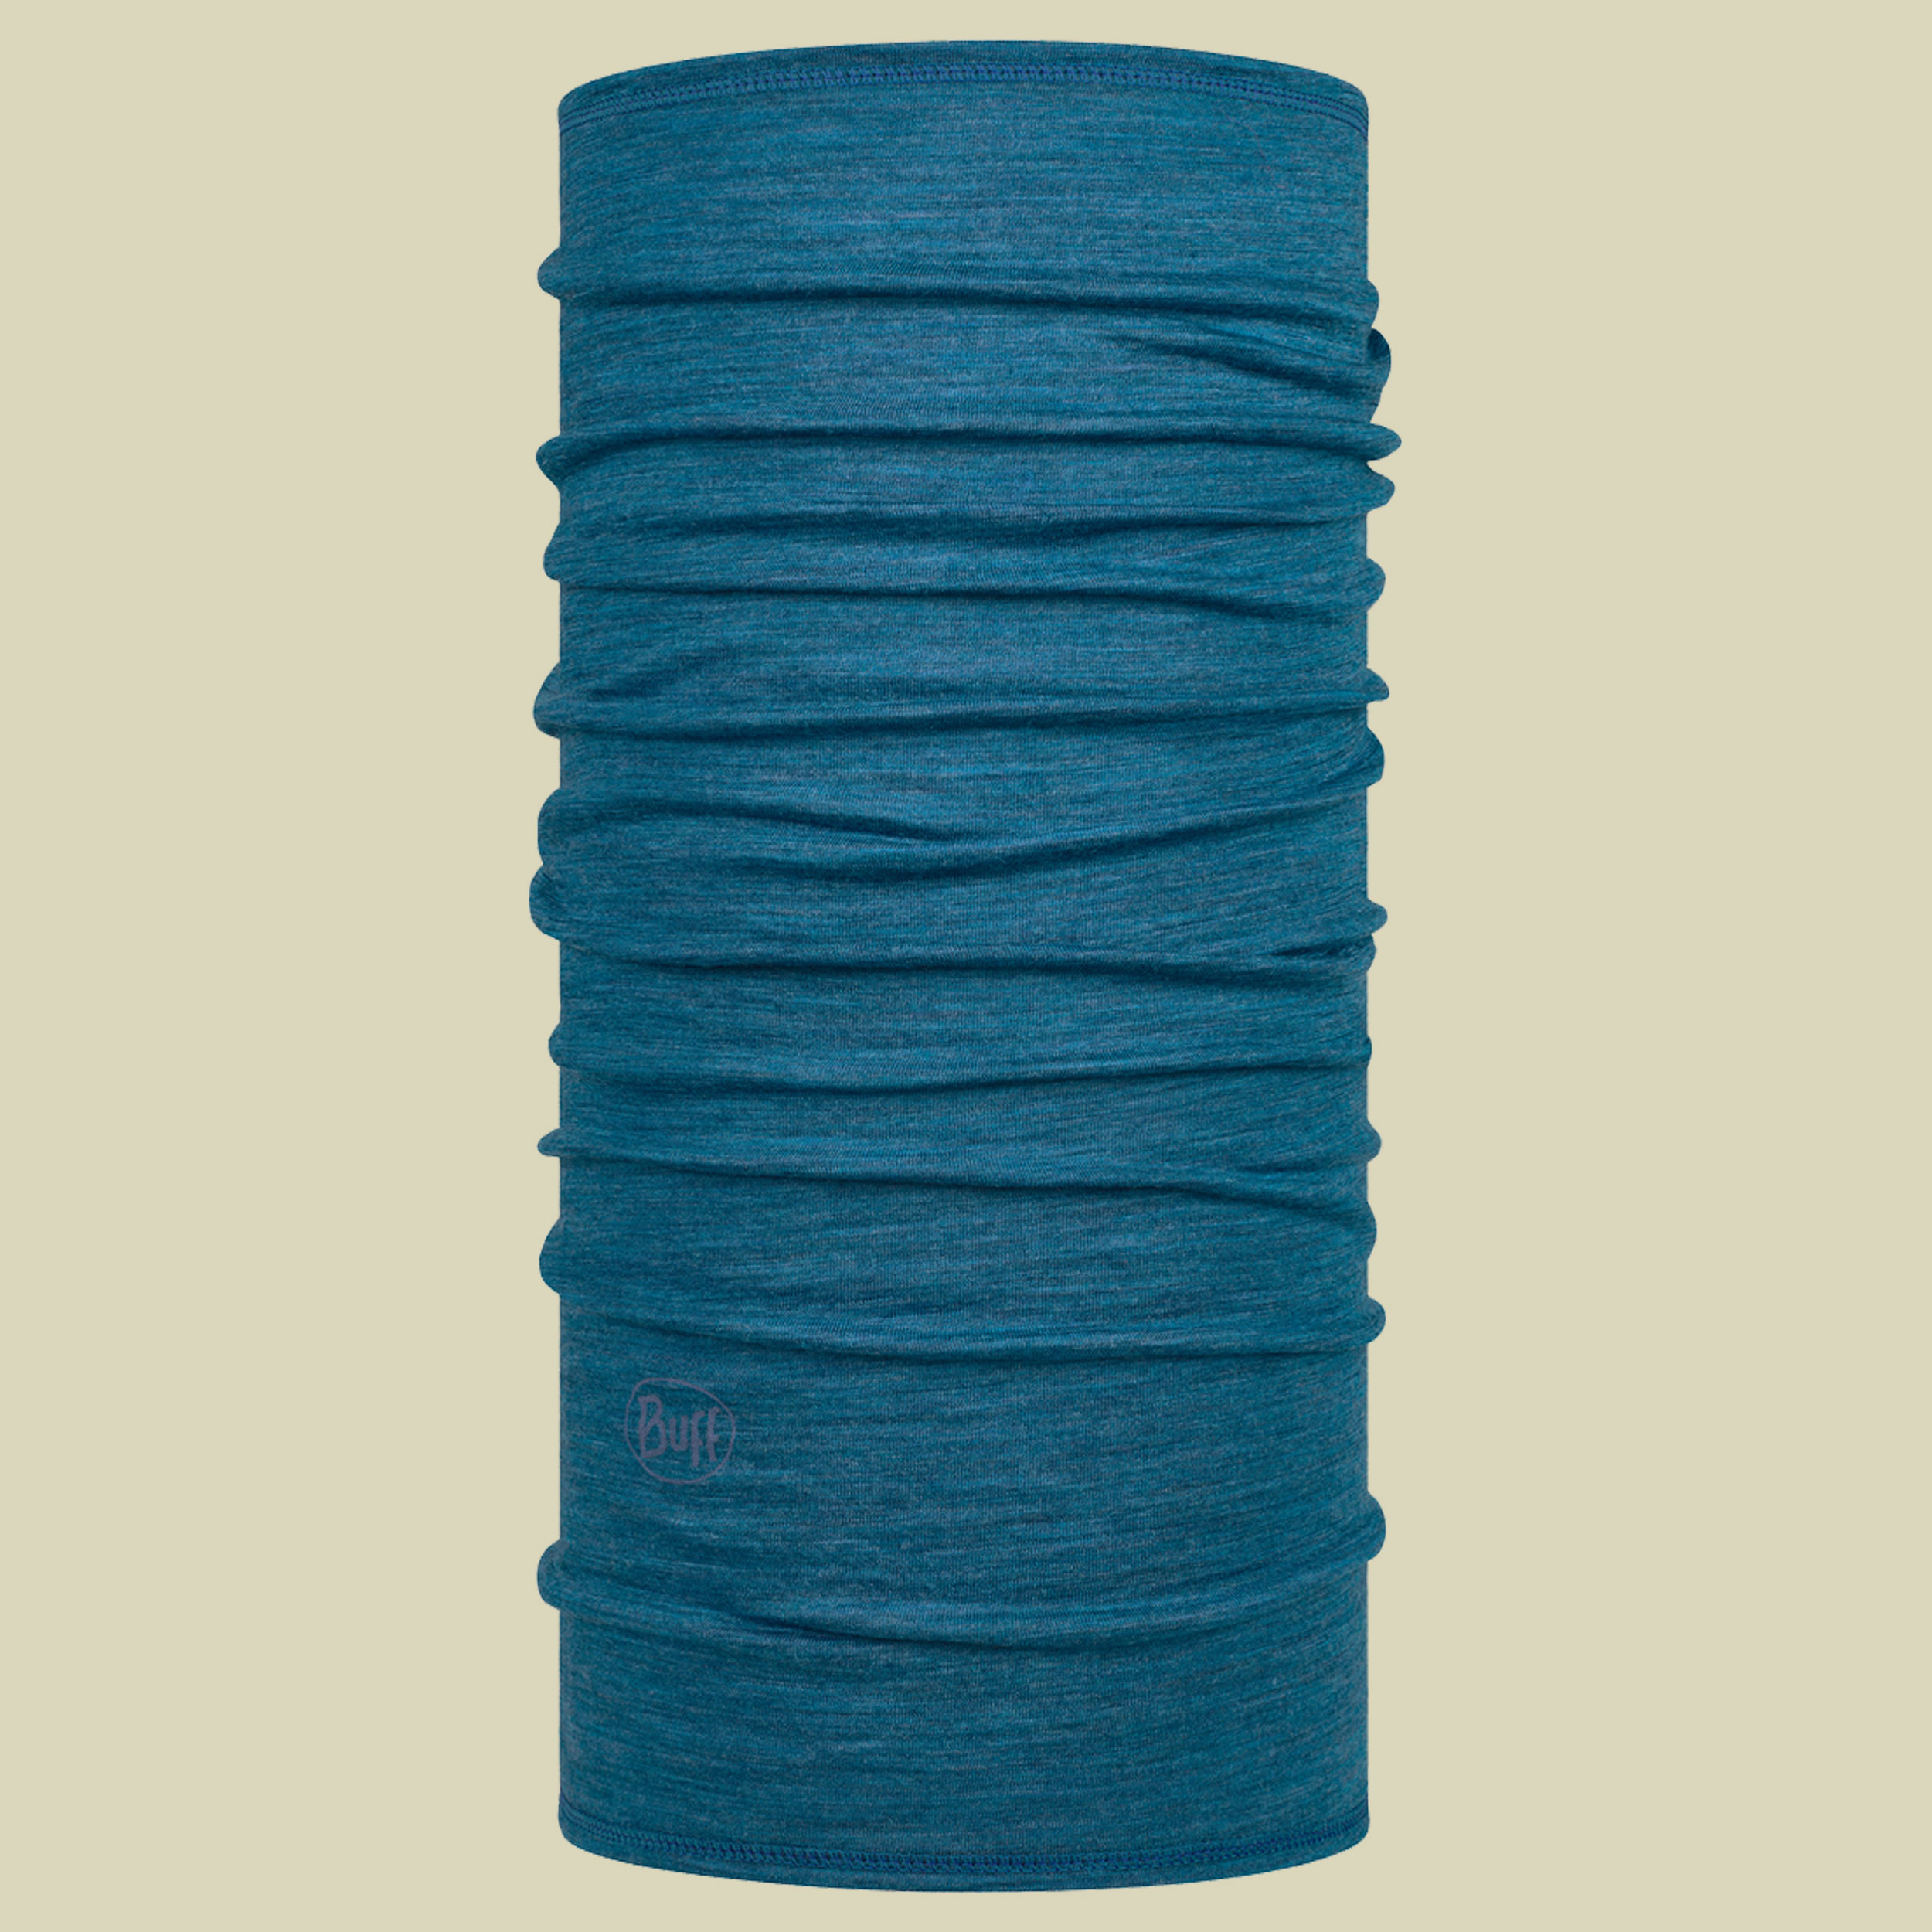 Lightweight Merino Wool Solid Größe one size Farbe solid dusty blue